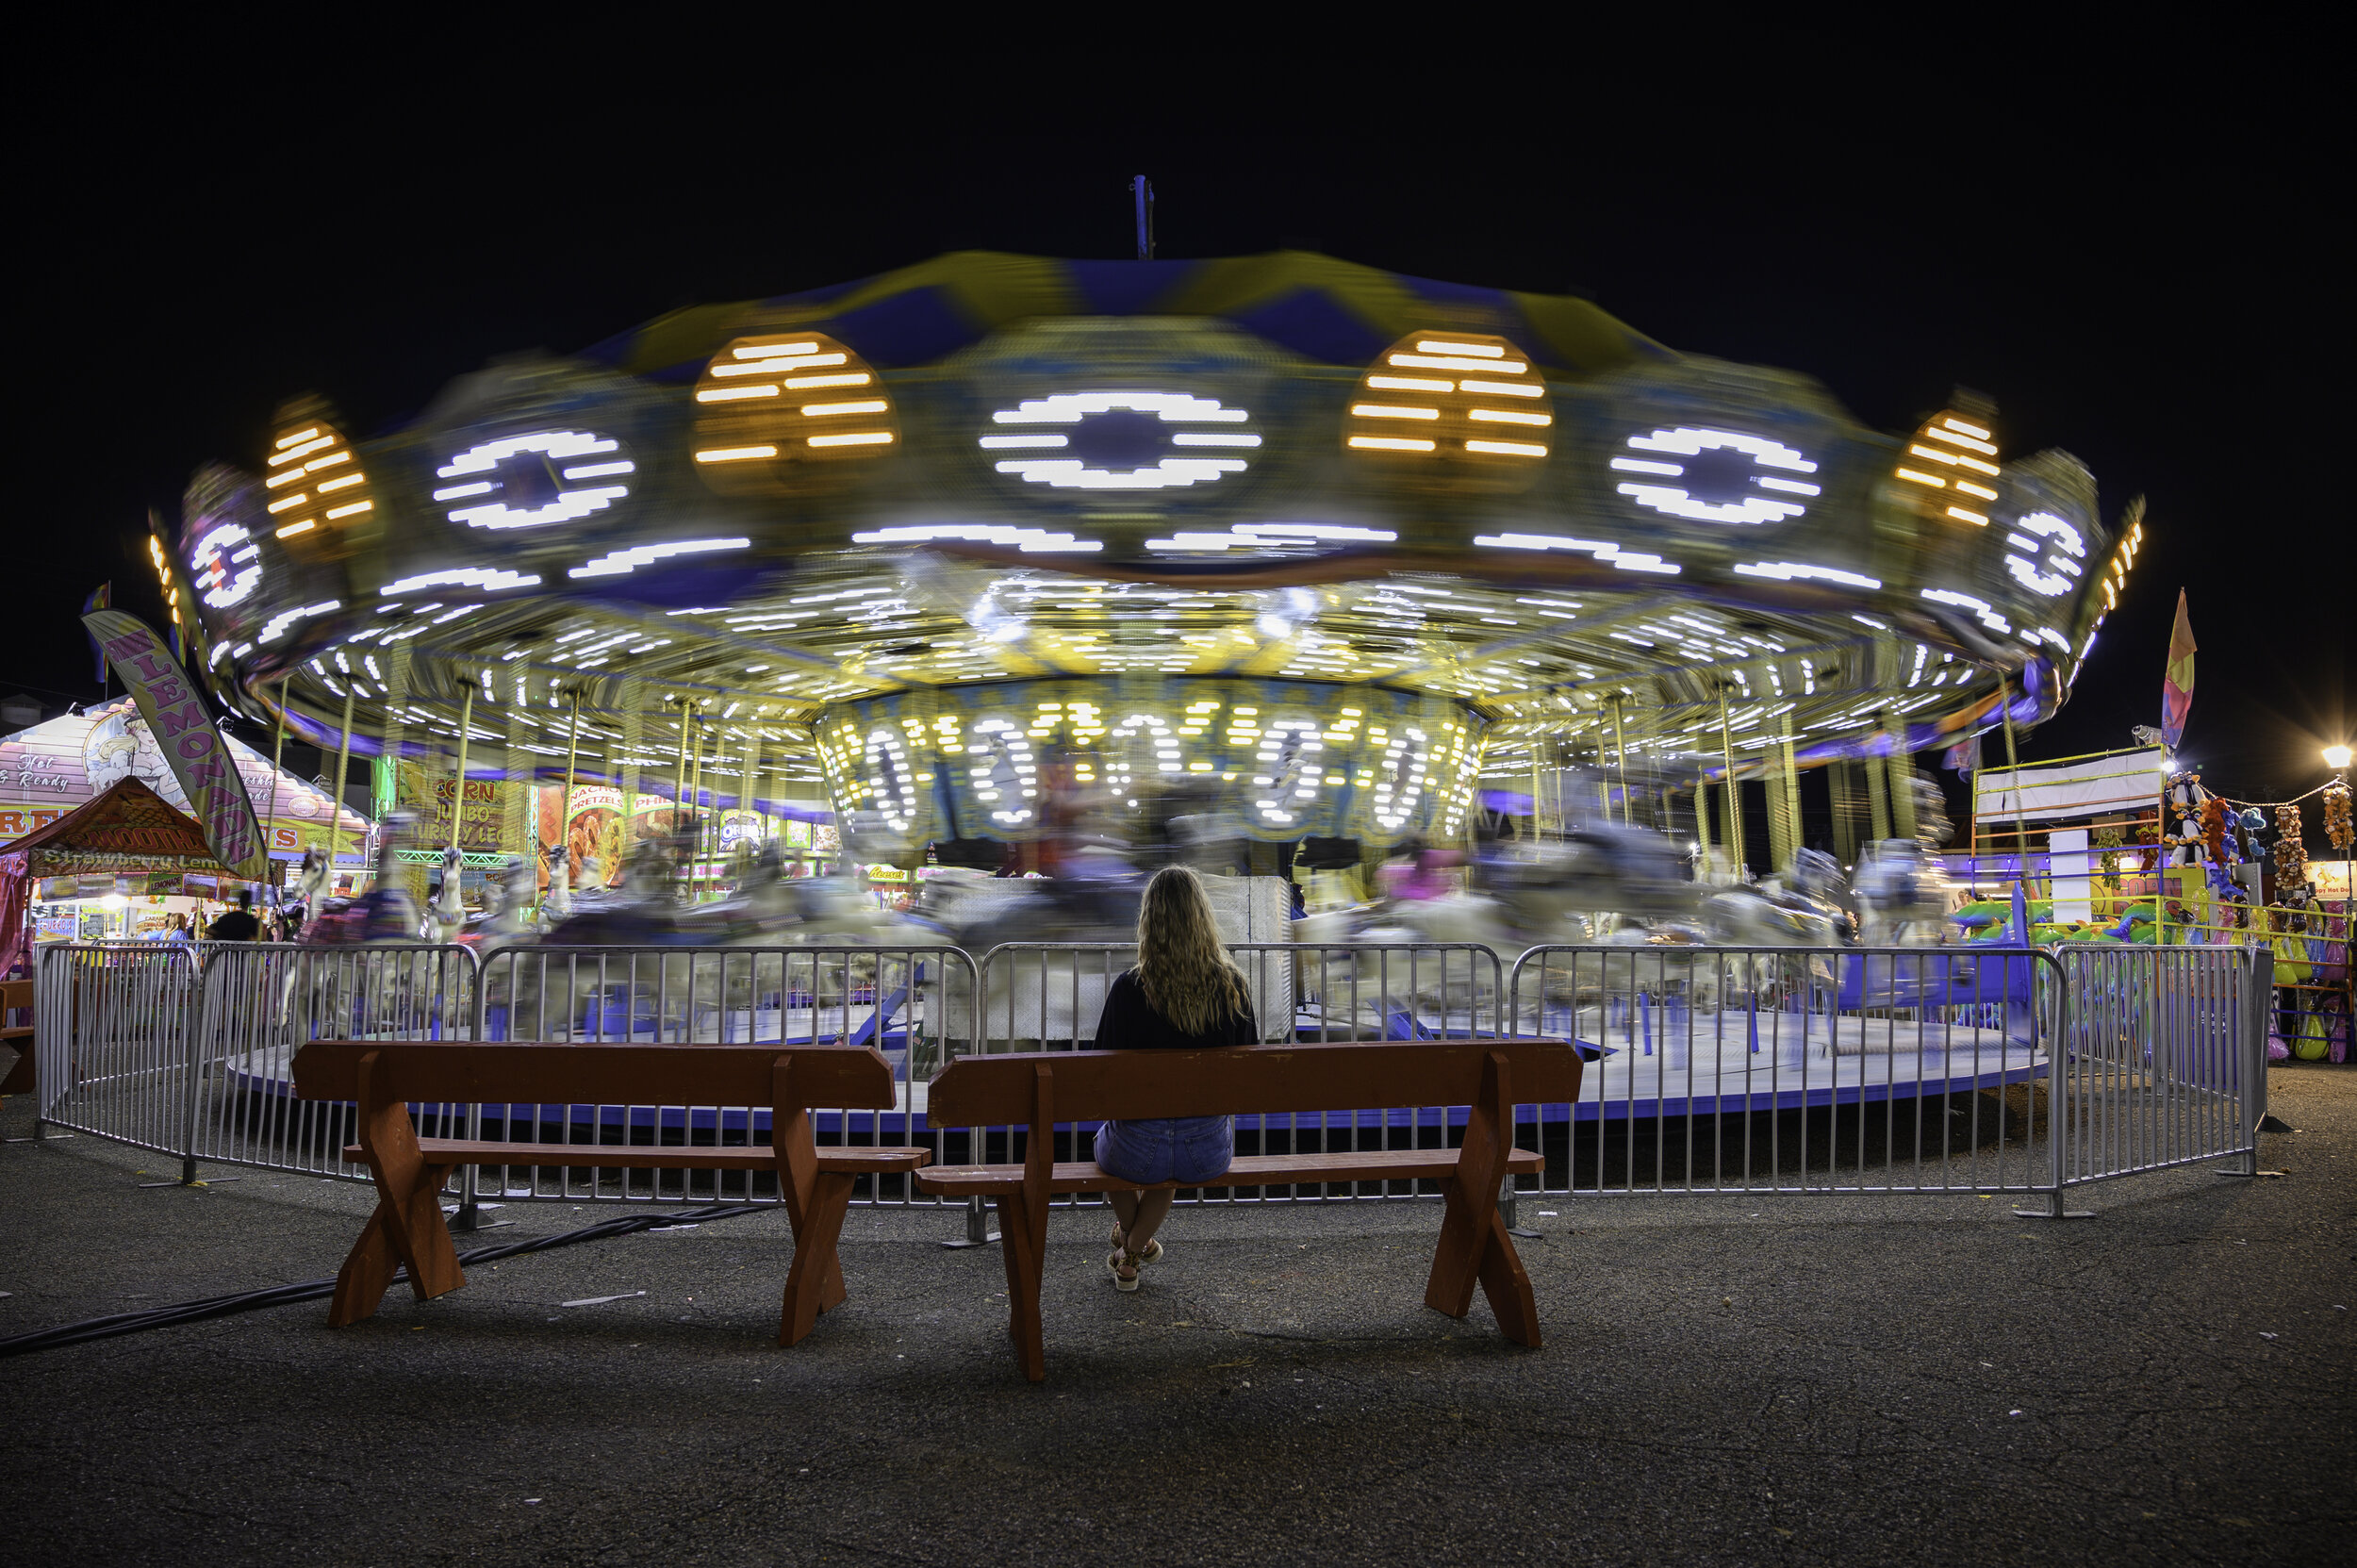  The carousel spins at The South Plains Fair fairgrounds on Tuesday, Sept. 24, 2019.  